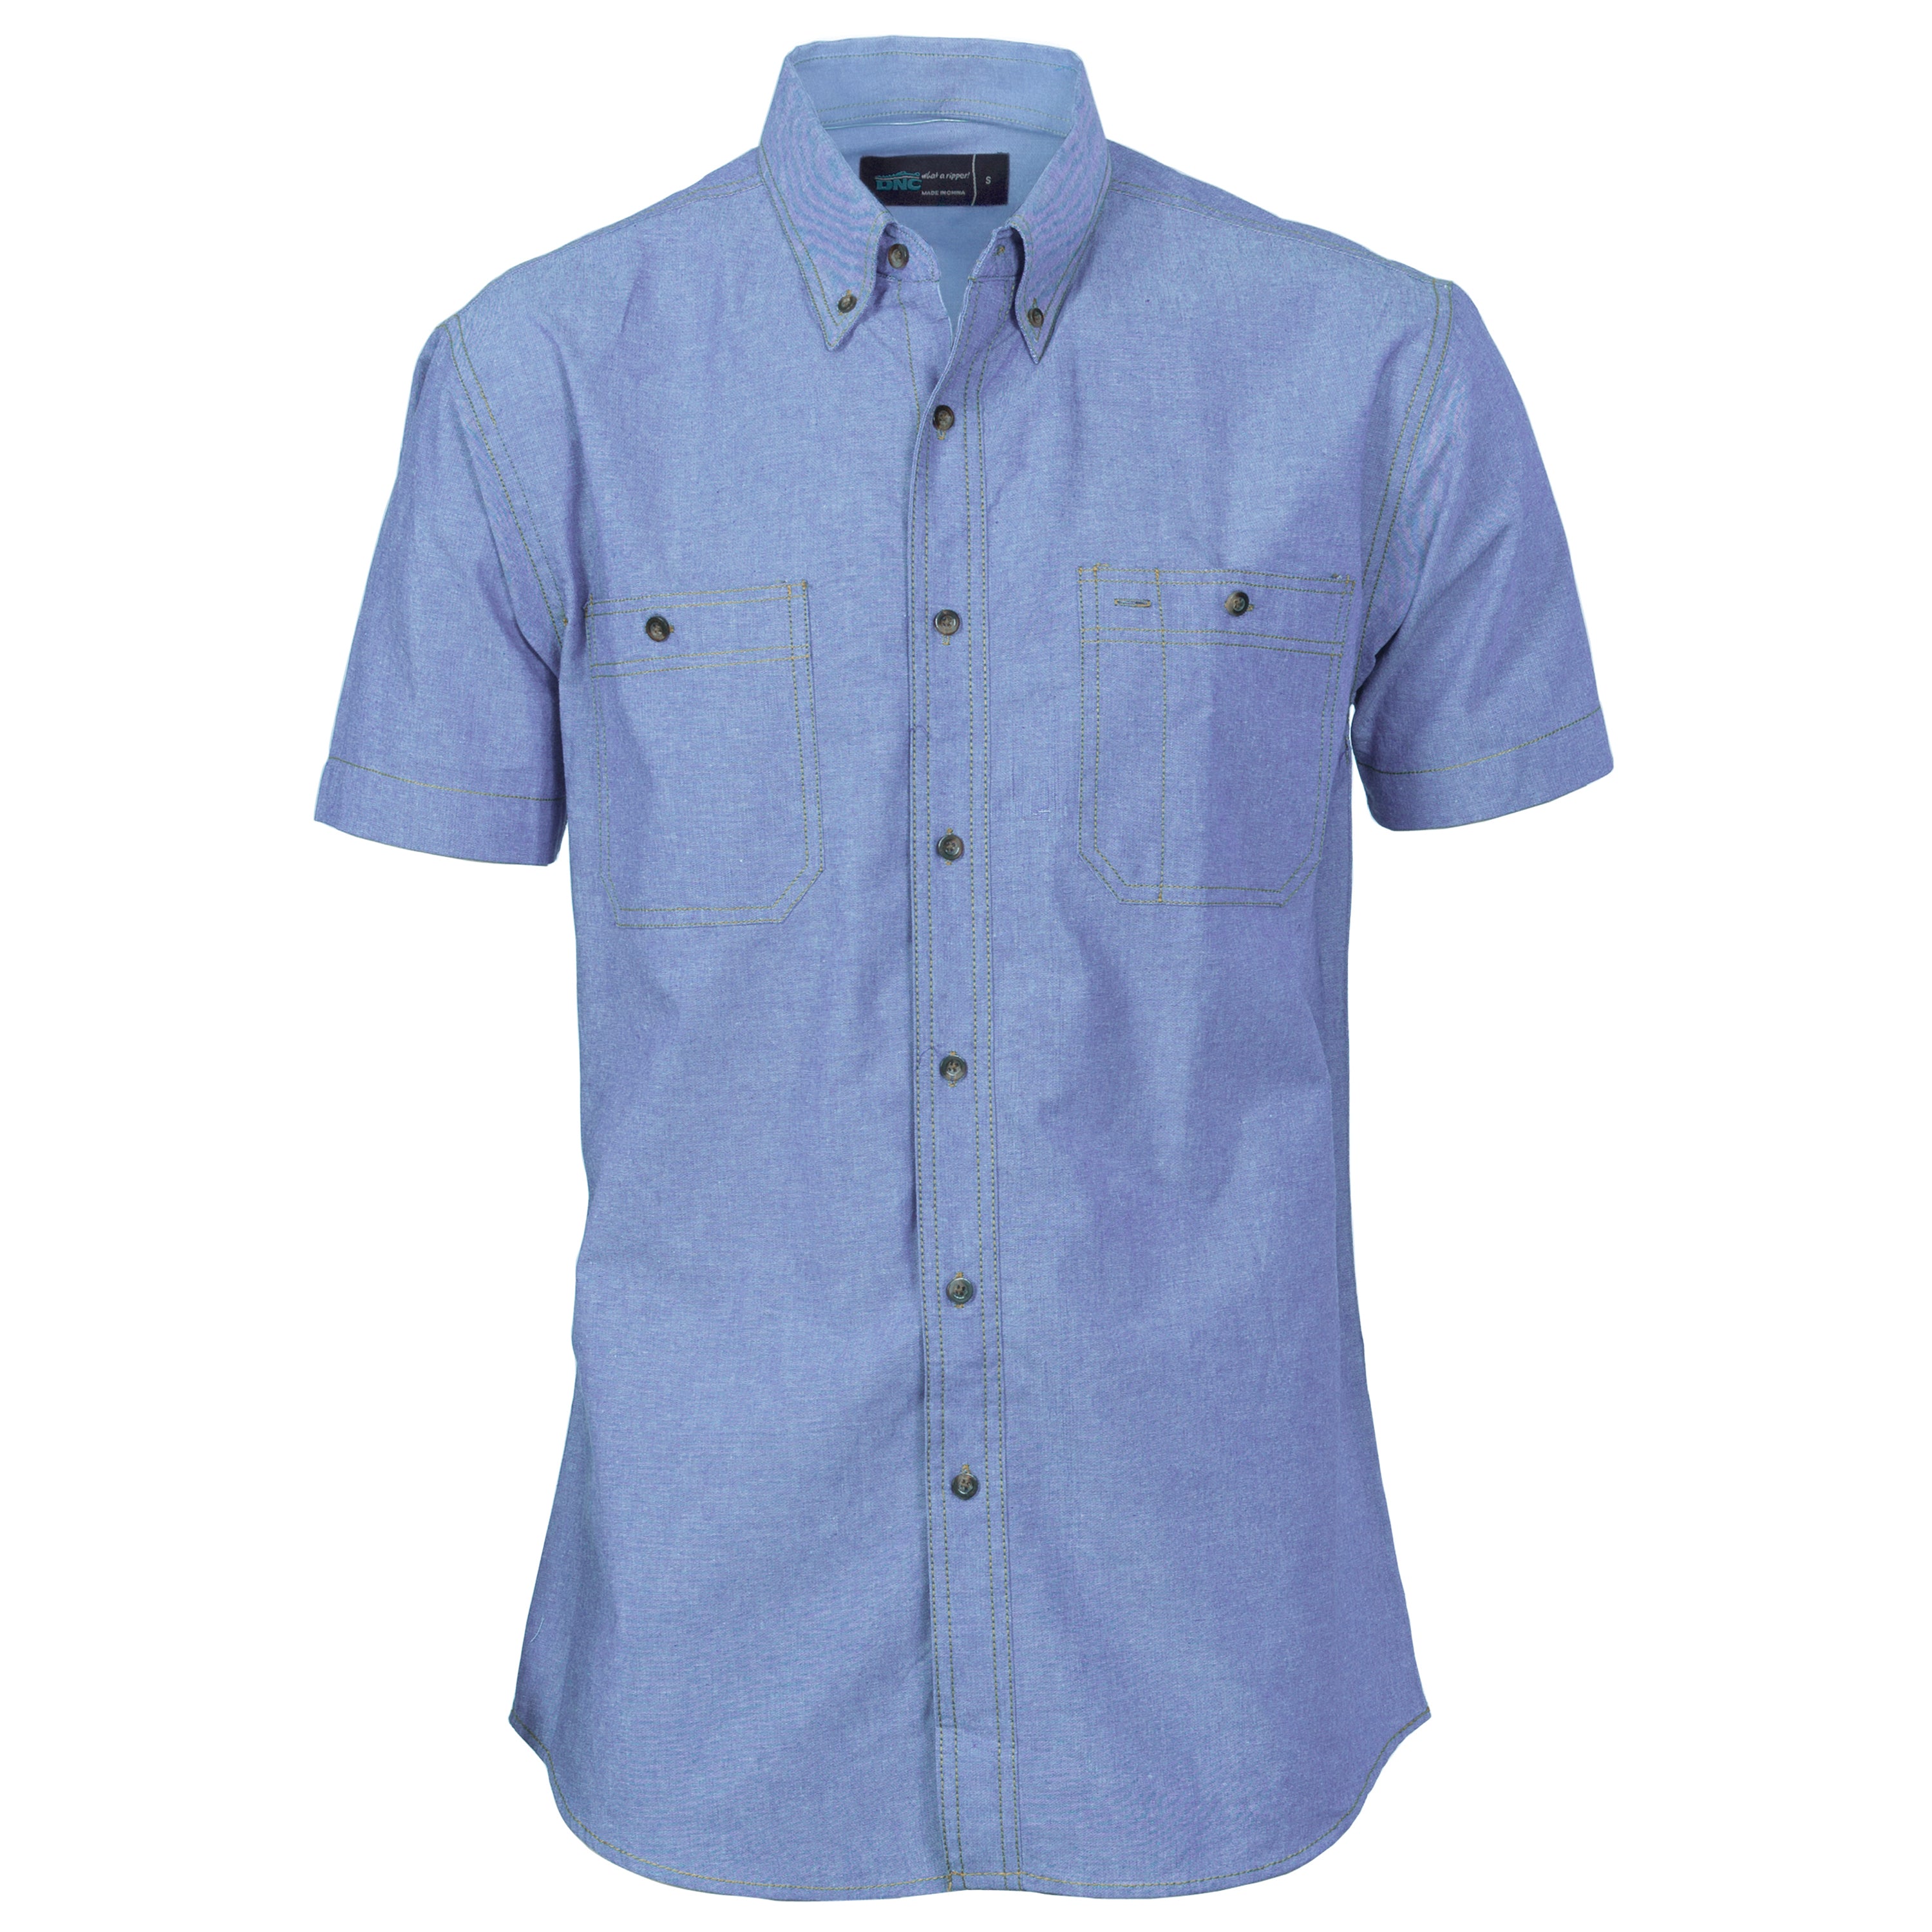 DNC 4101 Cotton Chambray Shirt with Twin Pocket Short Sleeve - Chambray